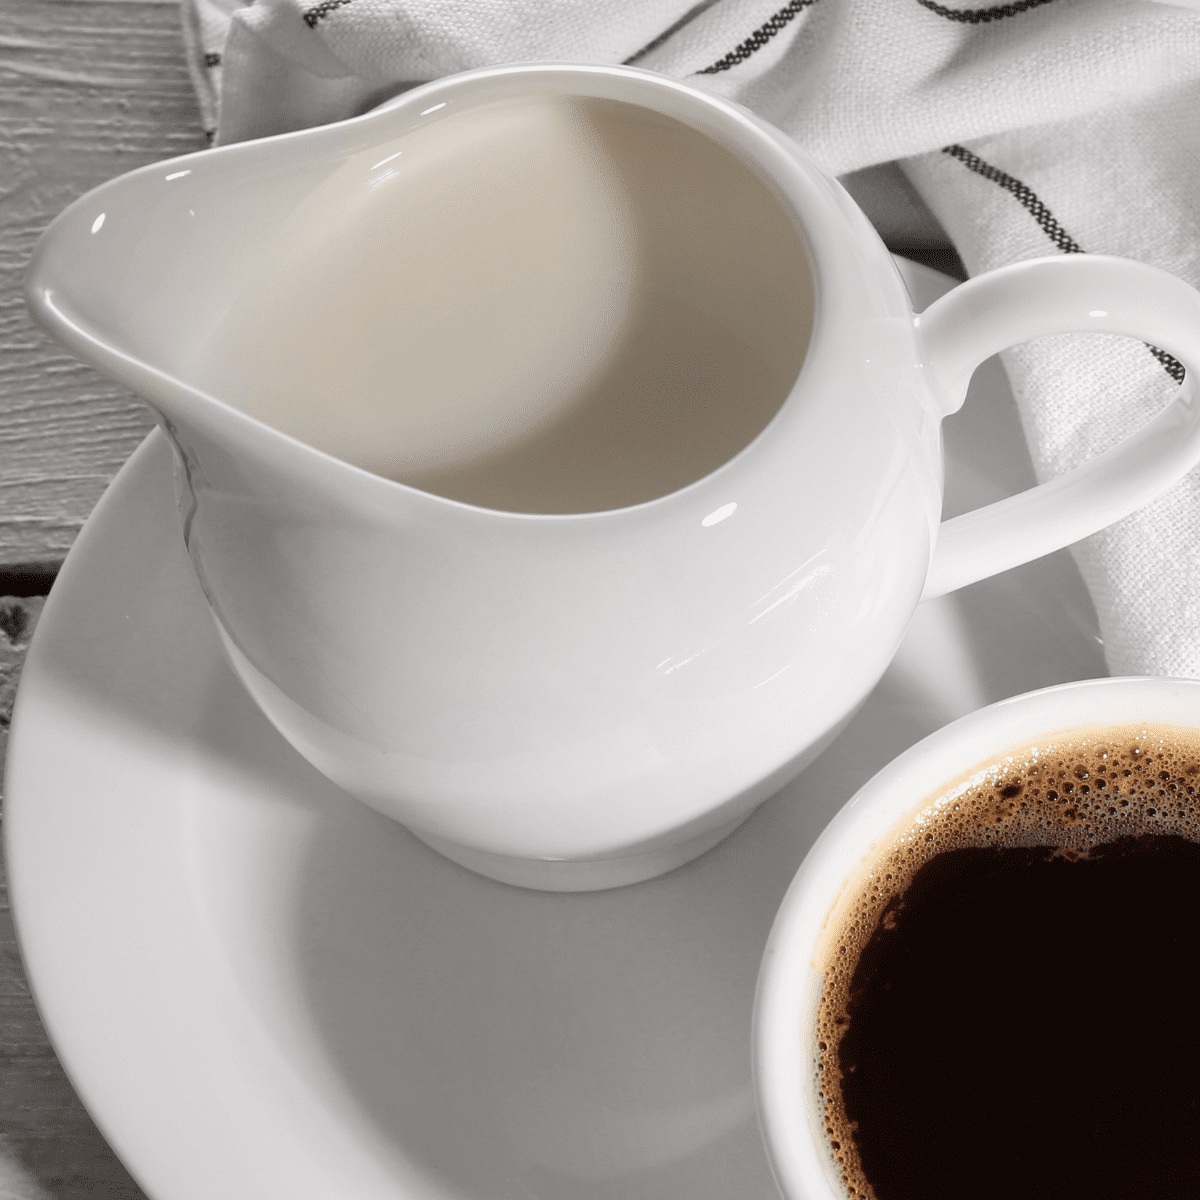 Deagourmet - The Coffee Break Collection